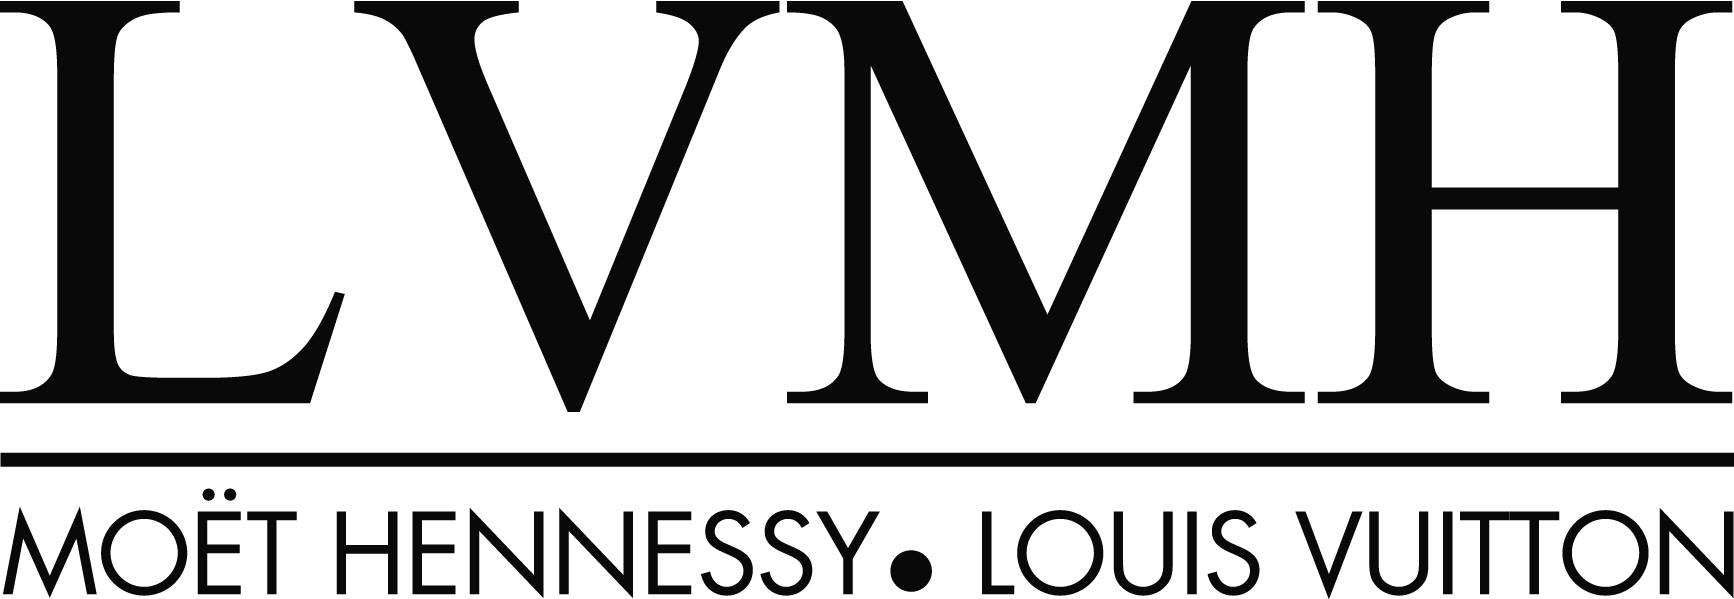 LVMH - Moët Hennessy Louis Vuitton